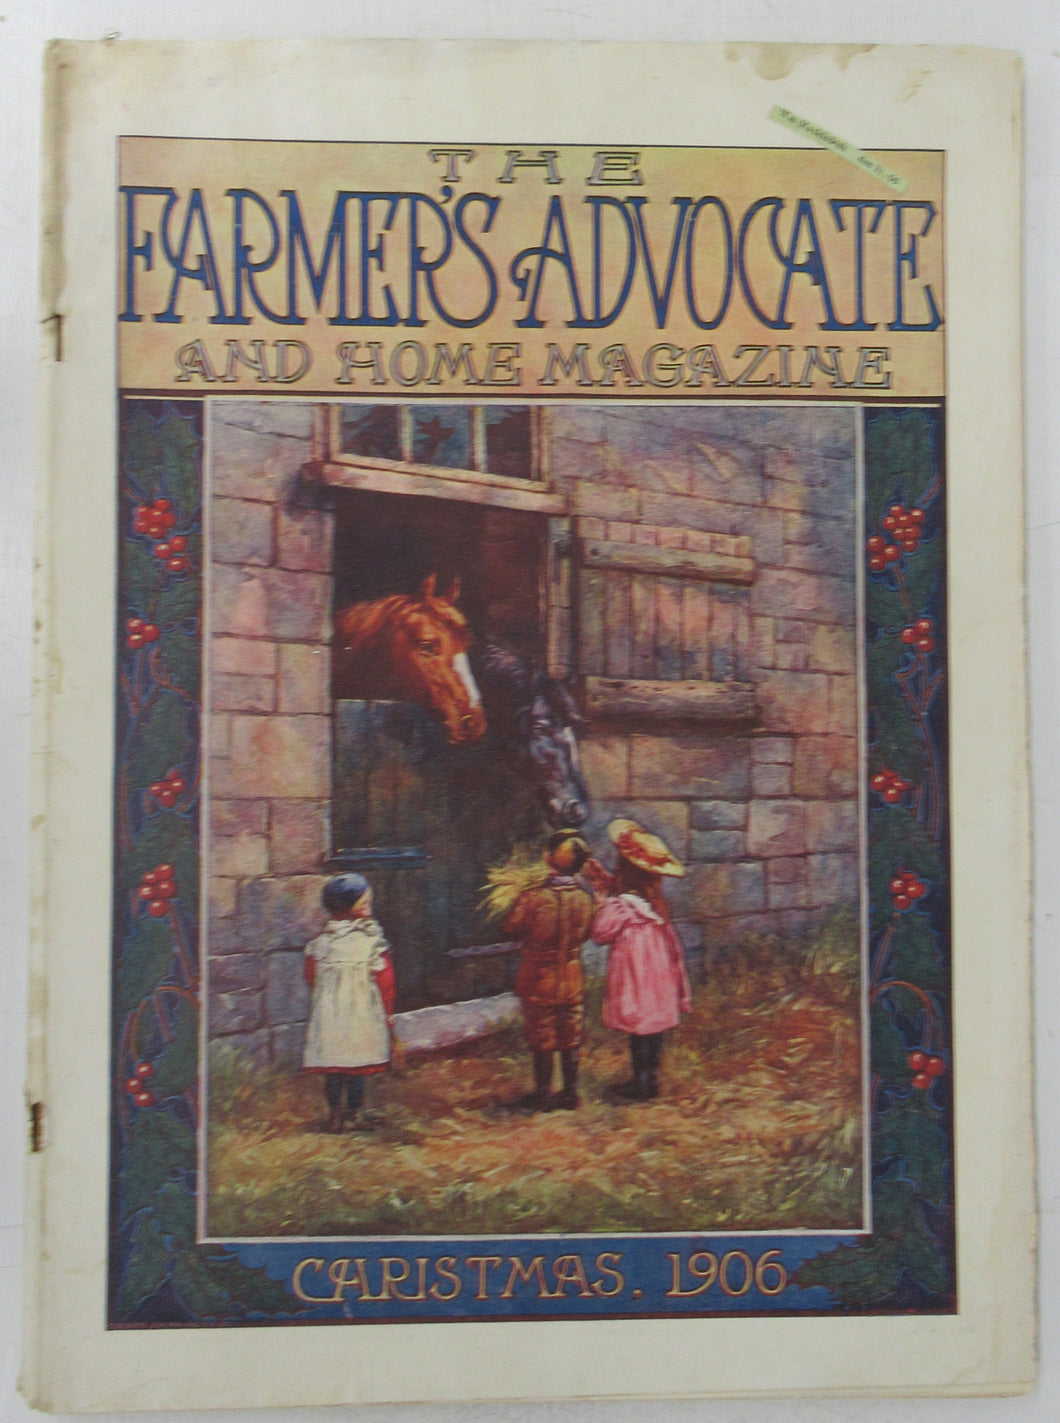 The Farmer's Advocate, December 13, 1906